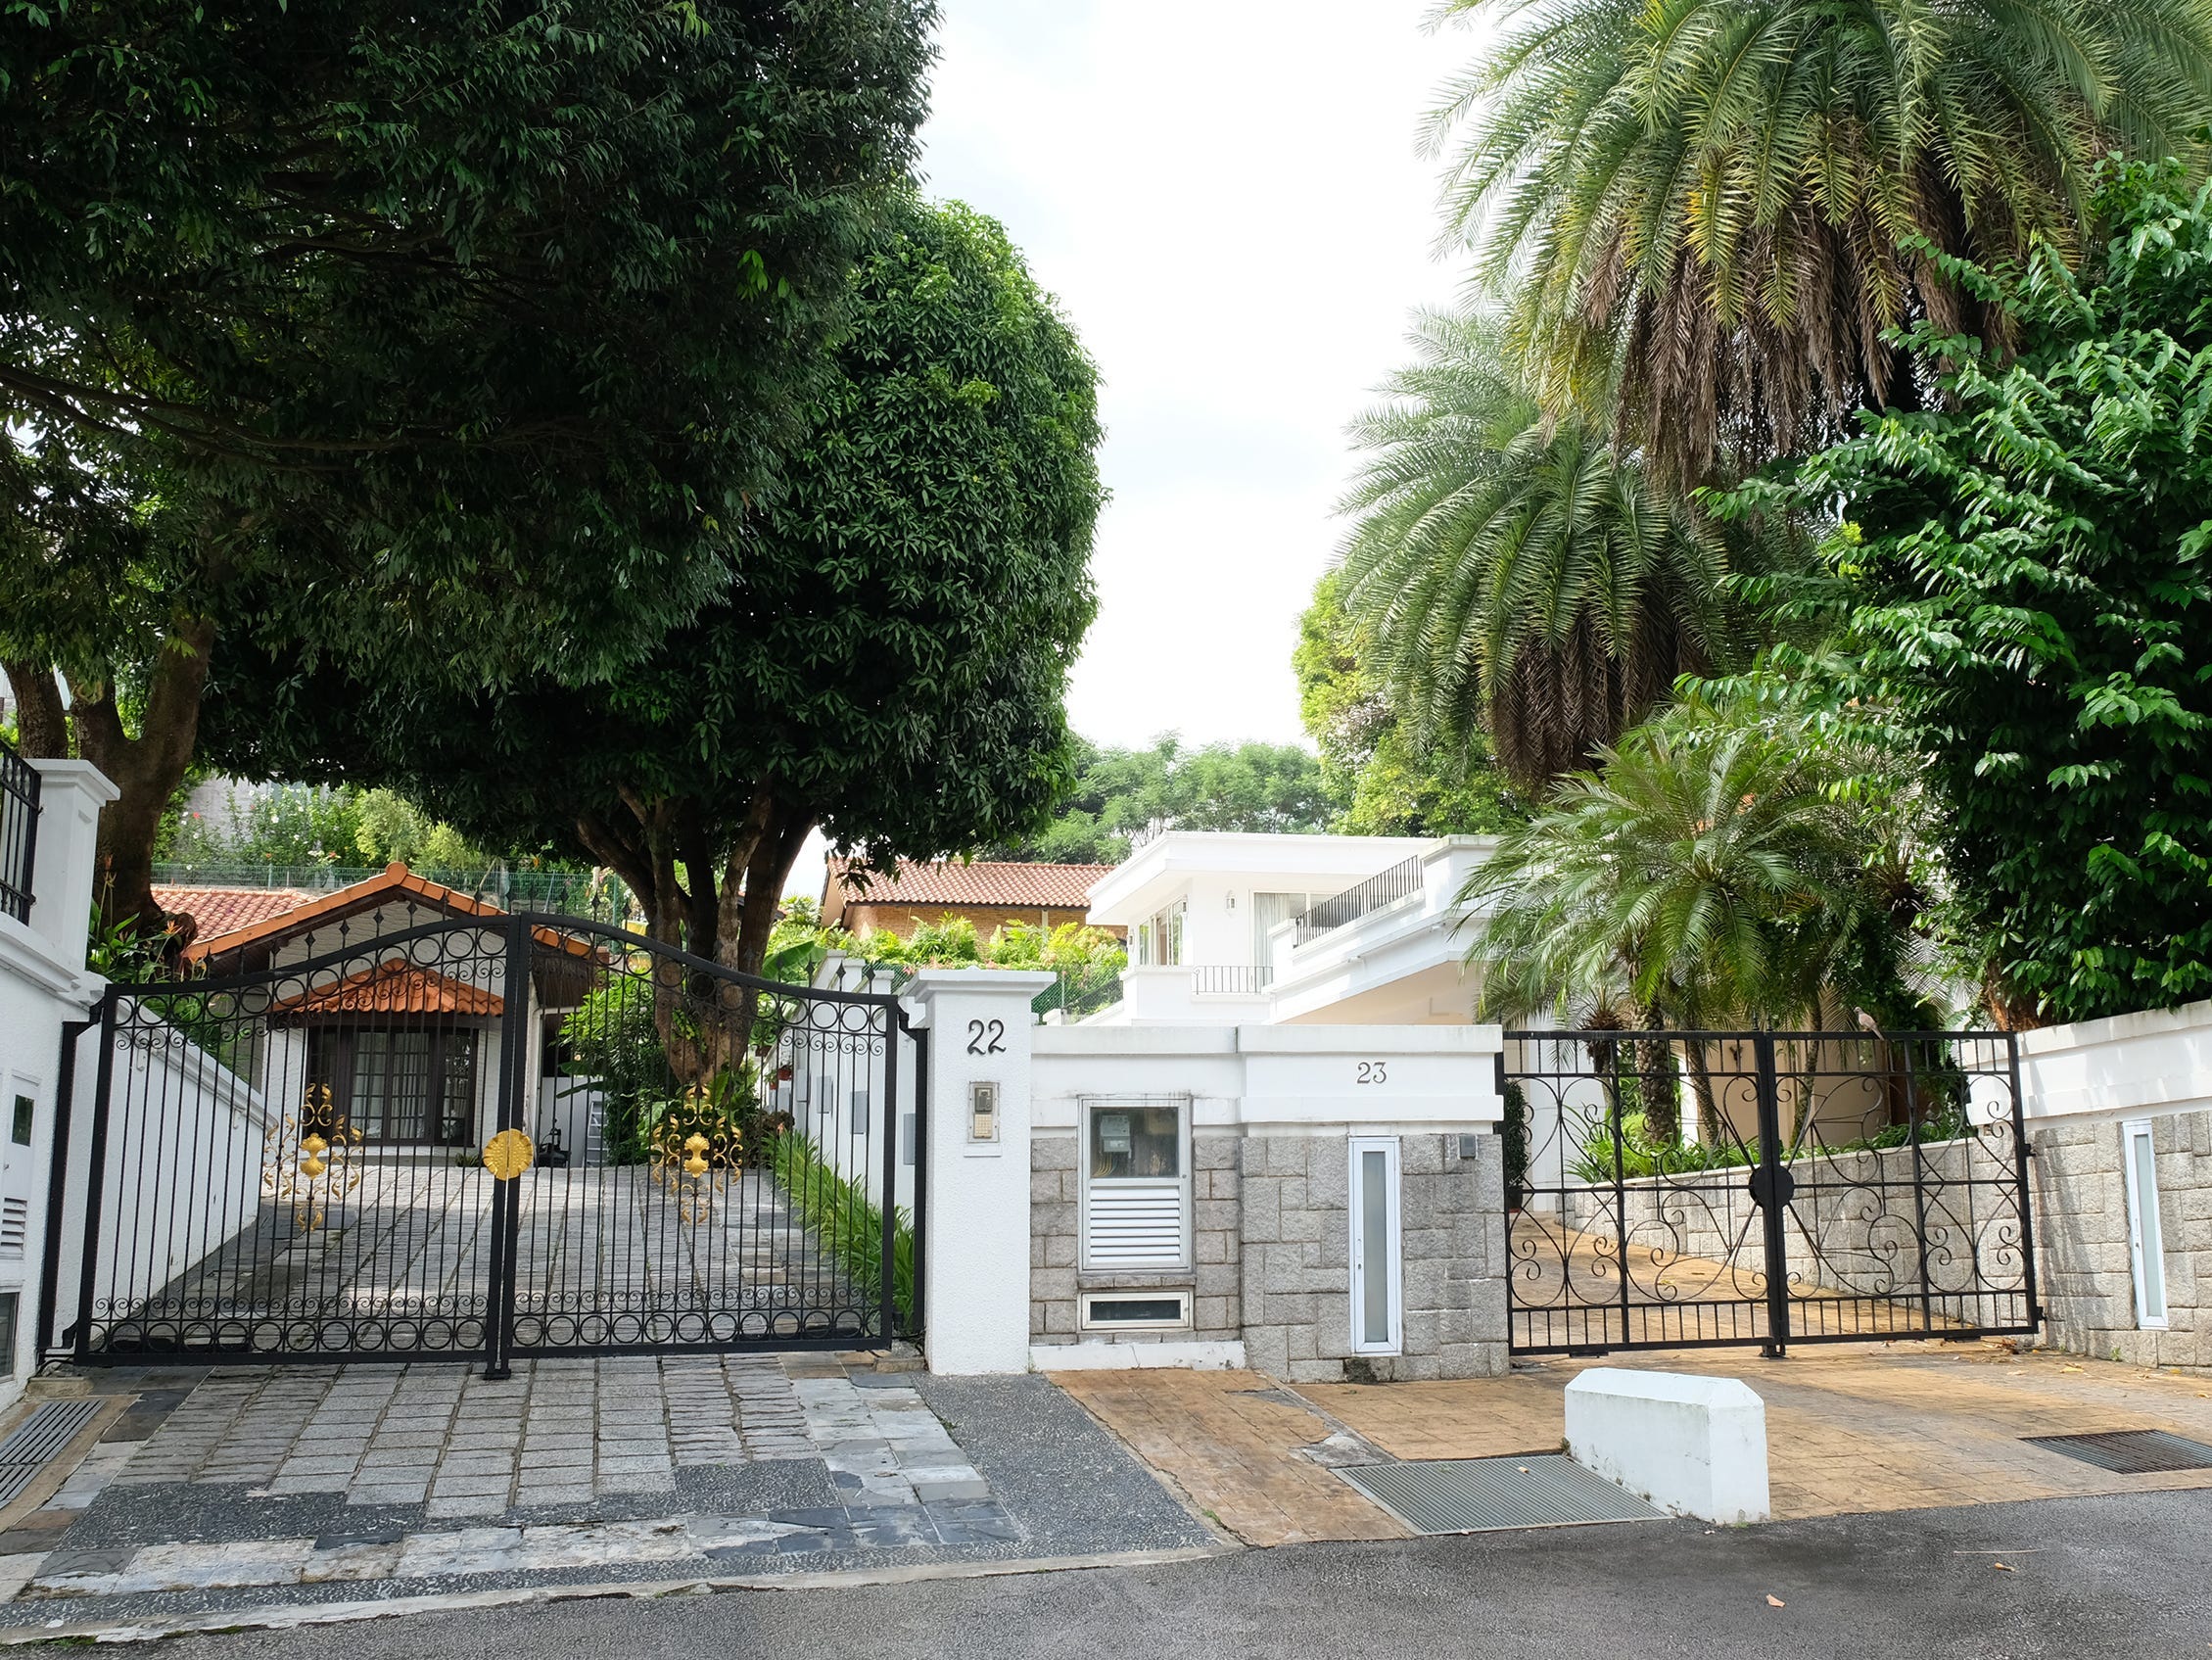 houses in queen astrid park neighborhood of singapore